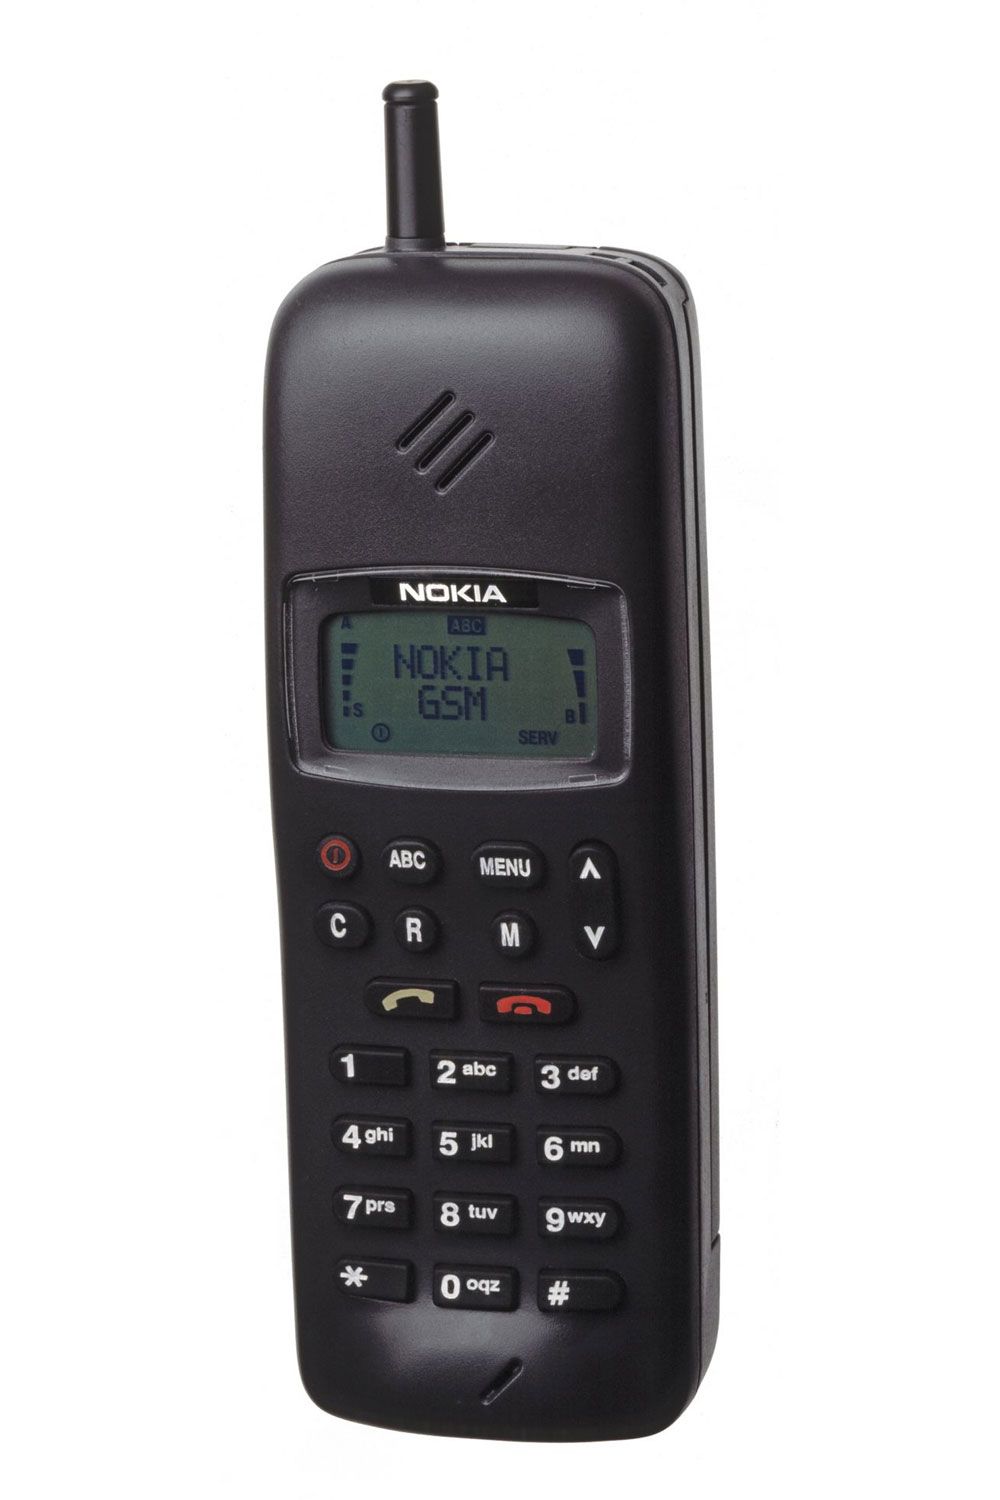 Nokia 1011 model phone